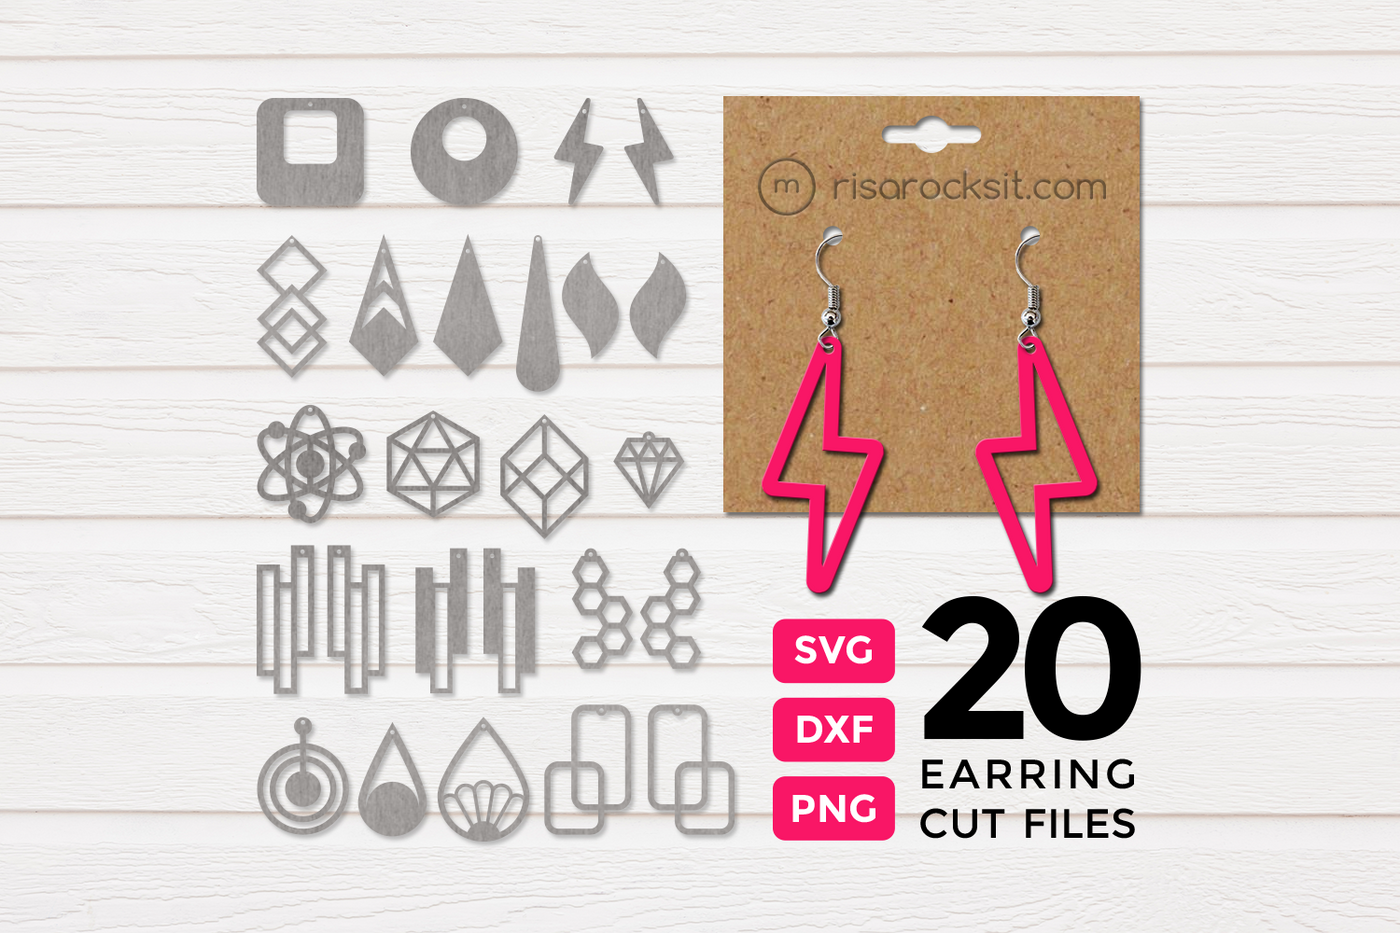 Set of 20 earring cut files.